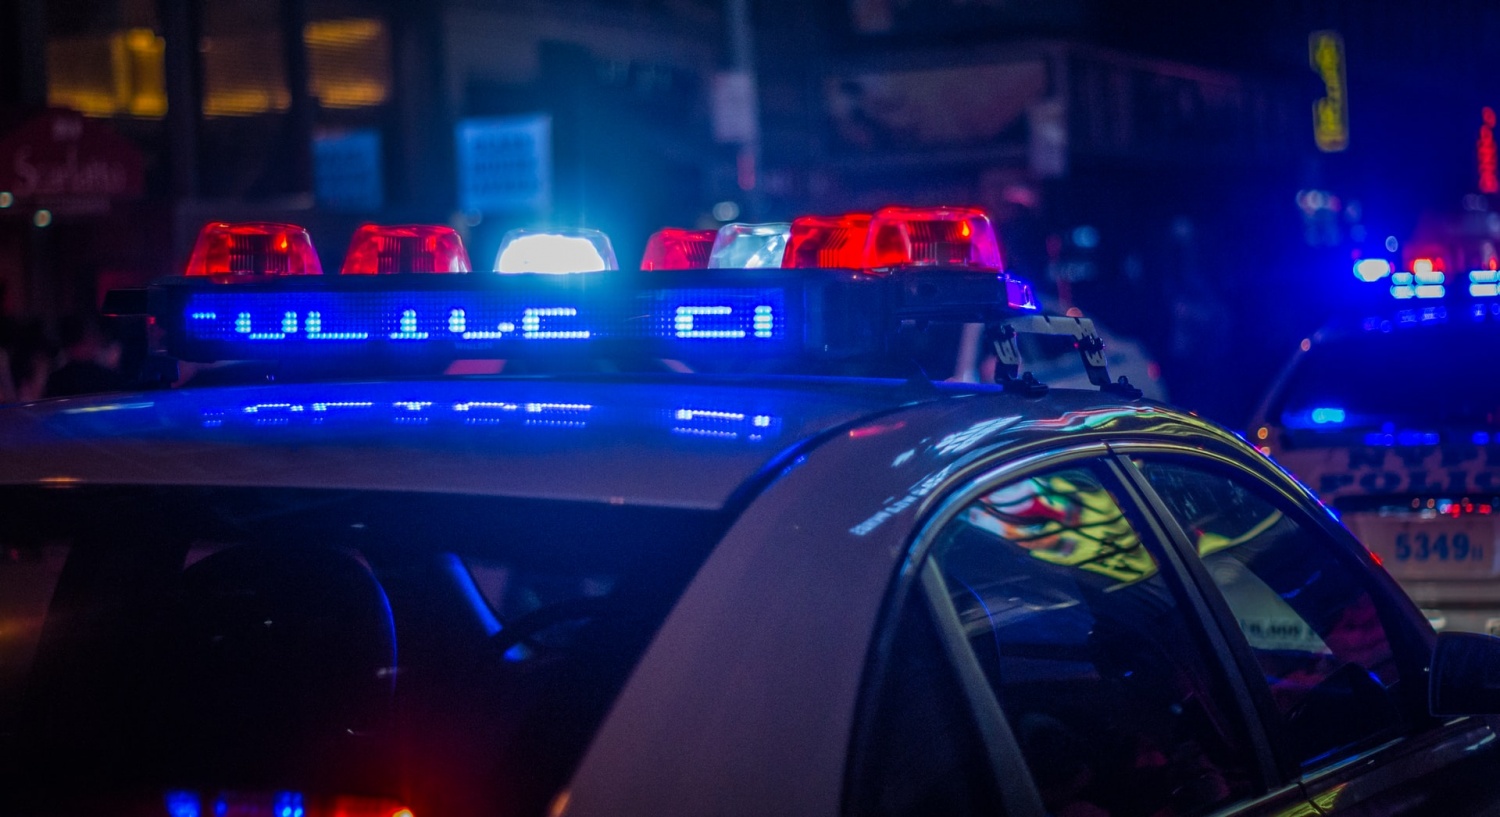 Police car